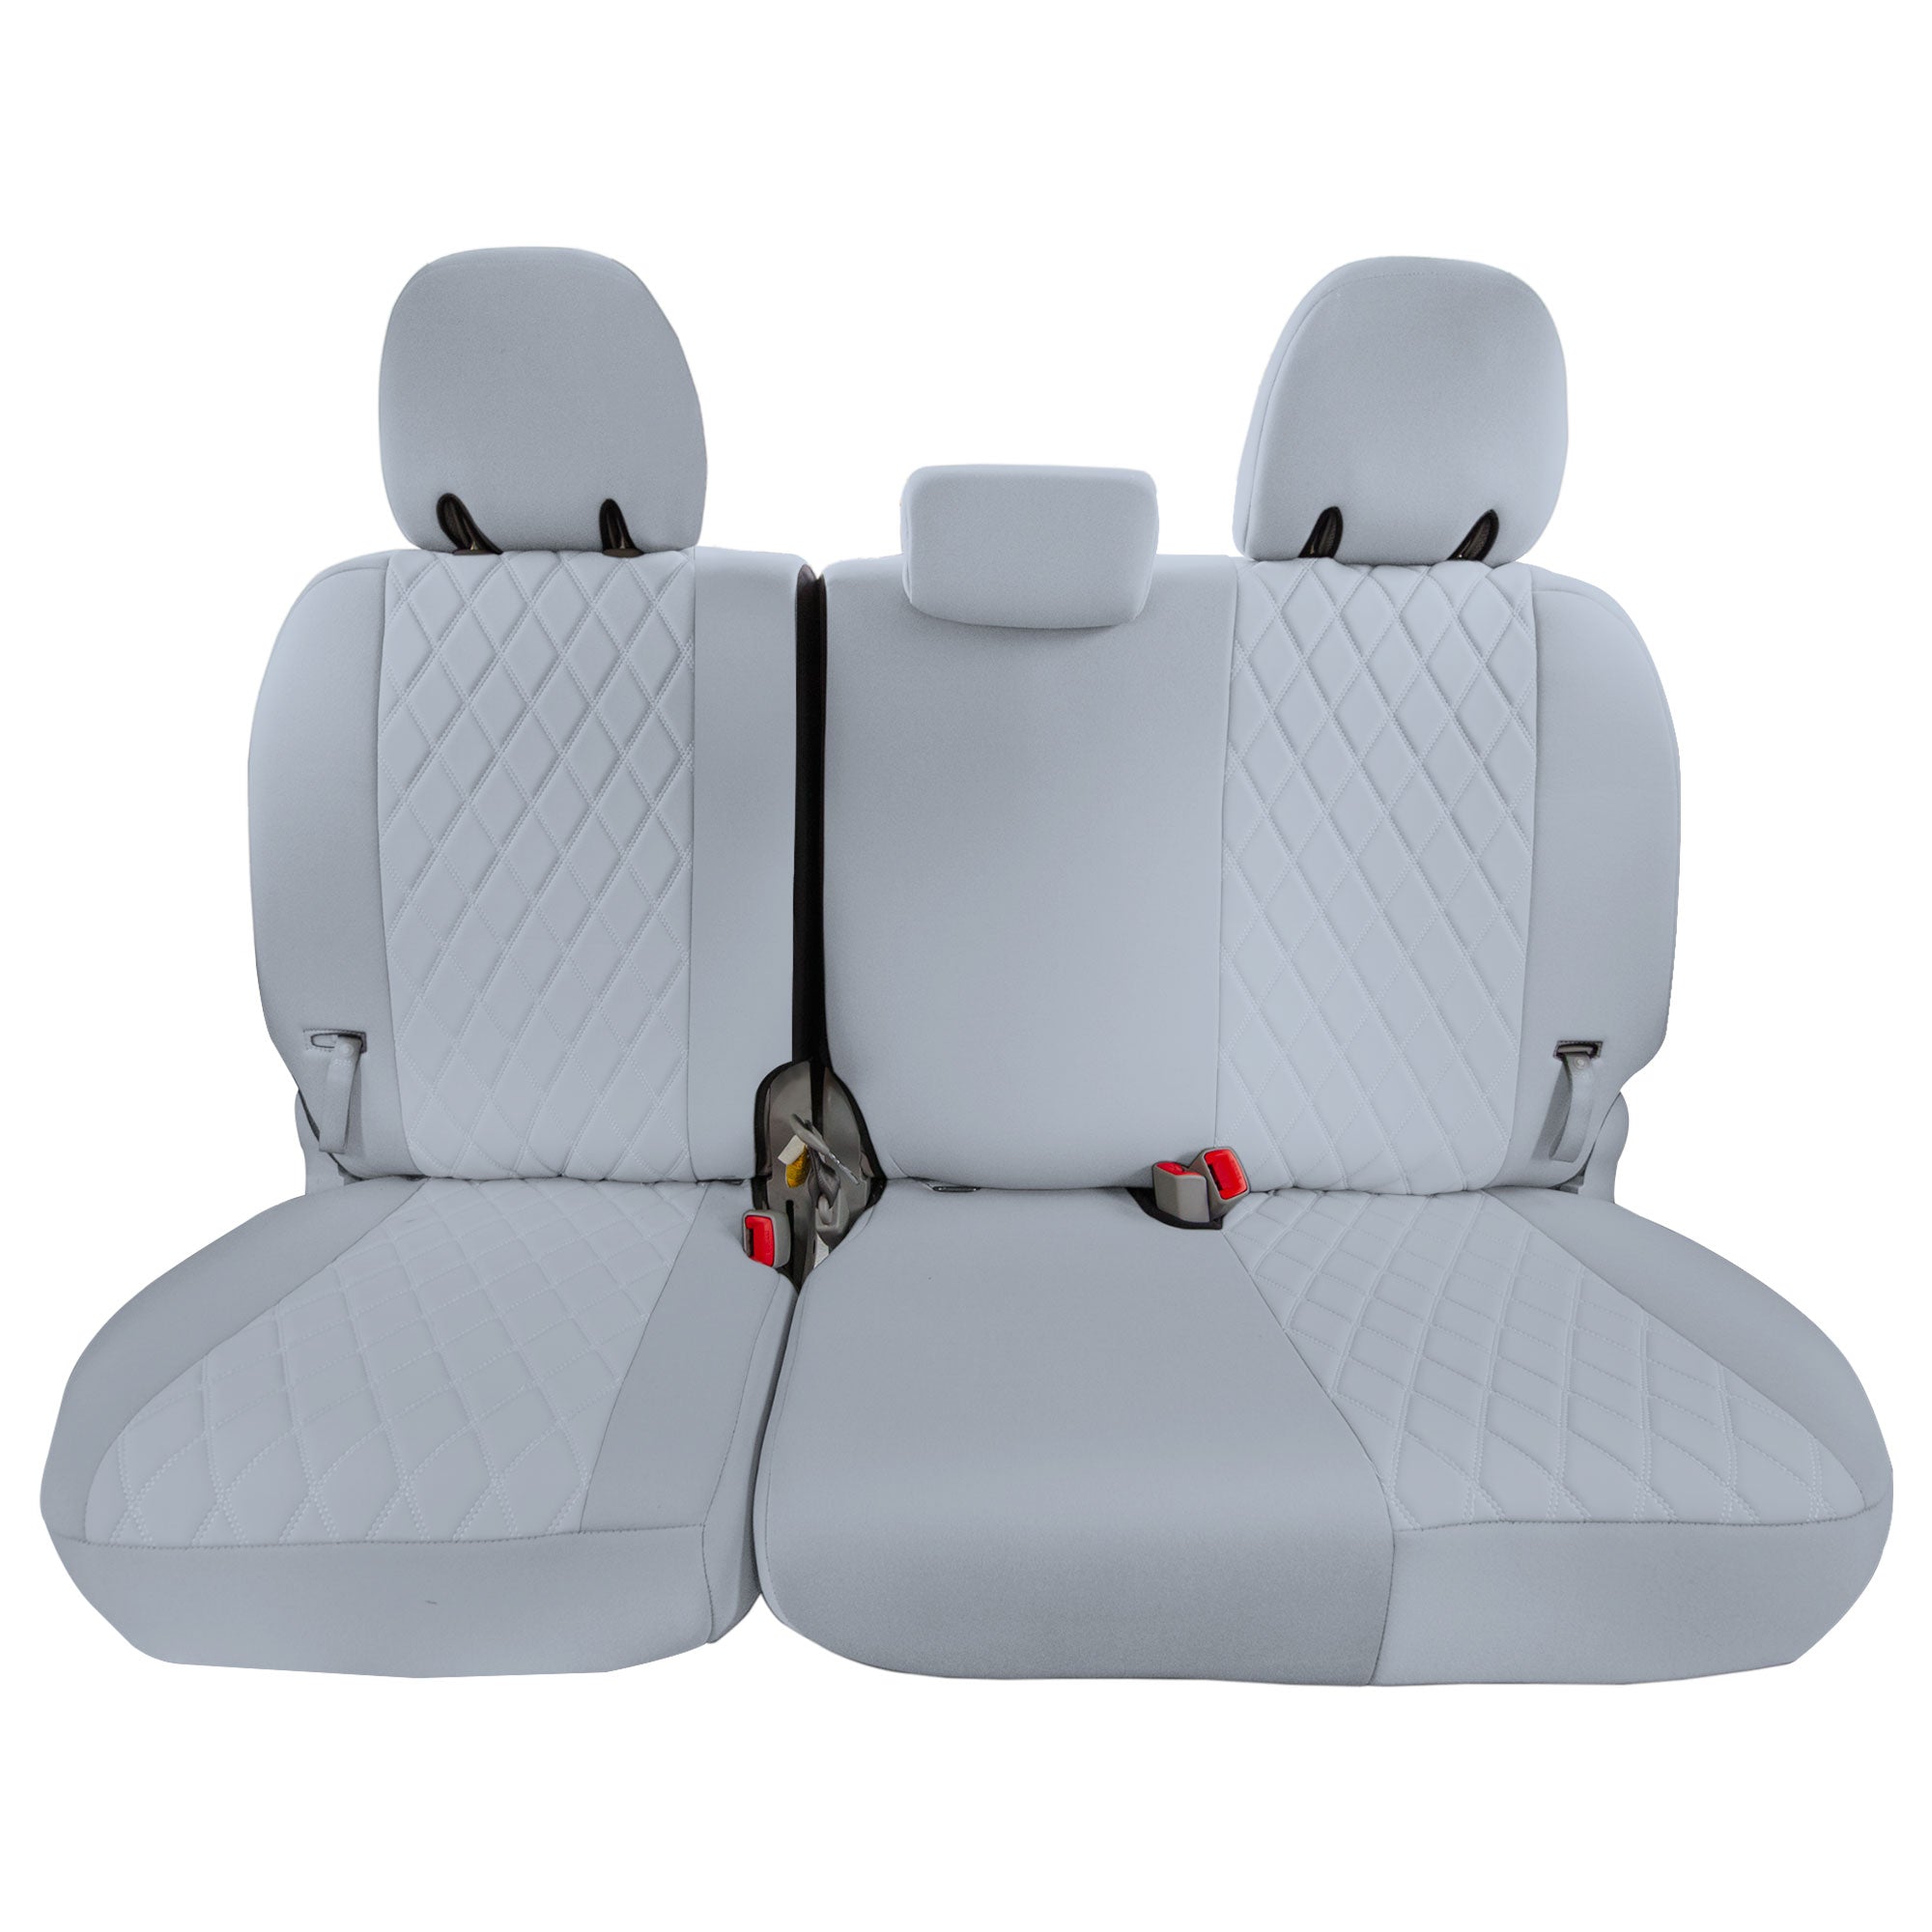 Toyota Sienna - 2011 - 2020 - 3rd Row Set Seat Covers - Solid Gray Neoprene